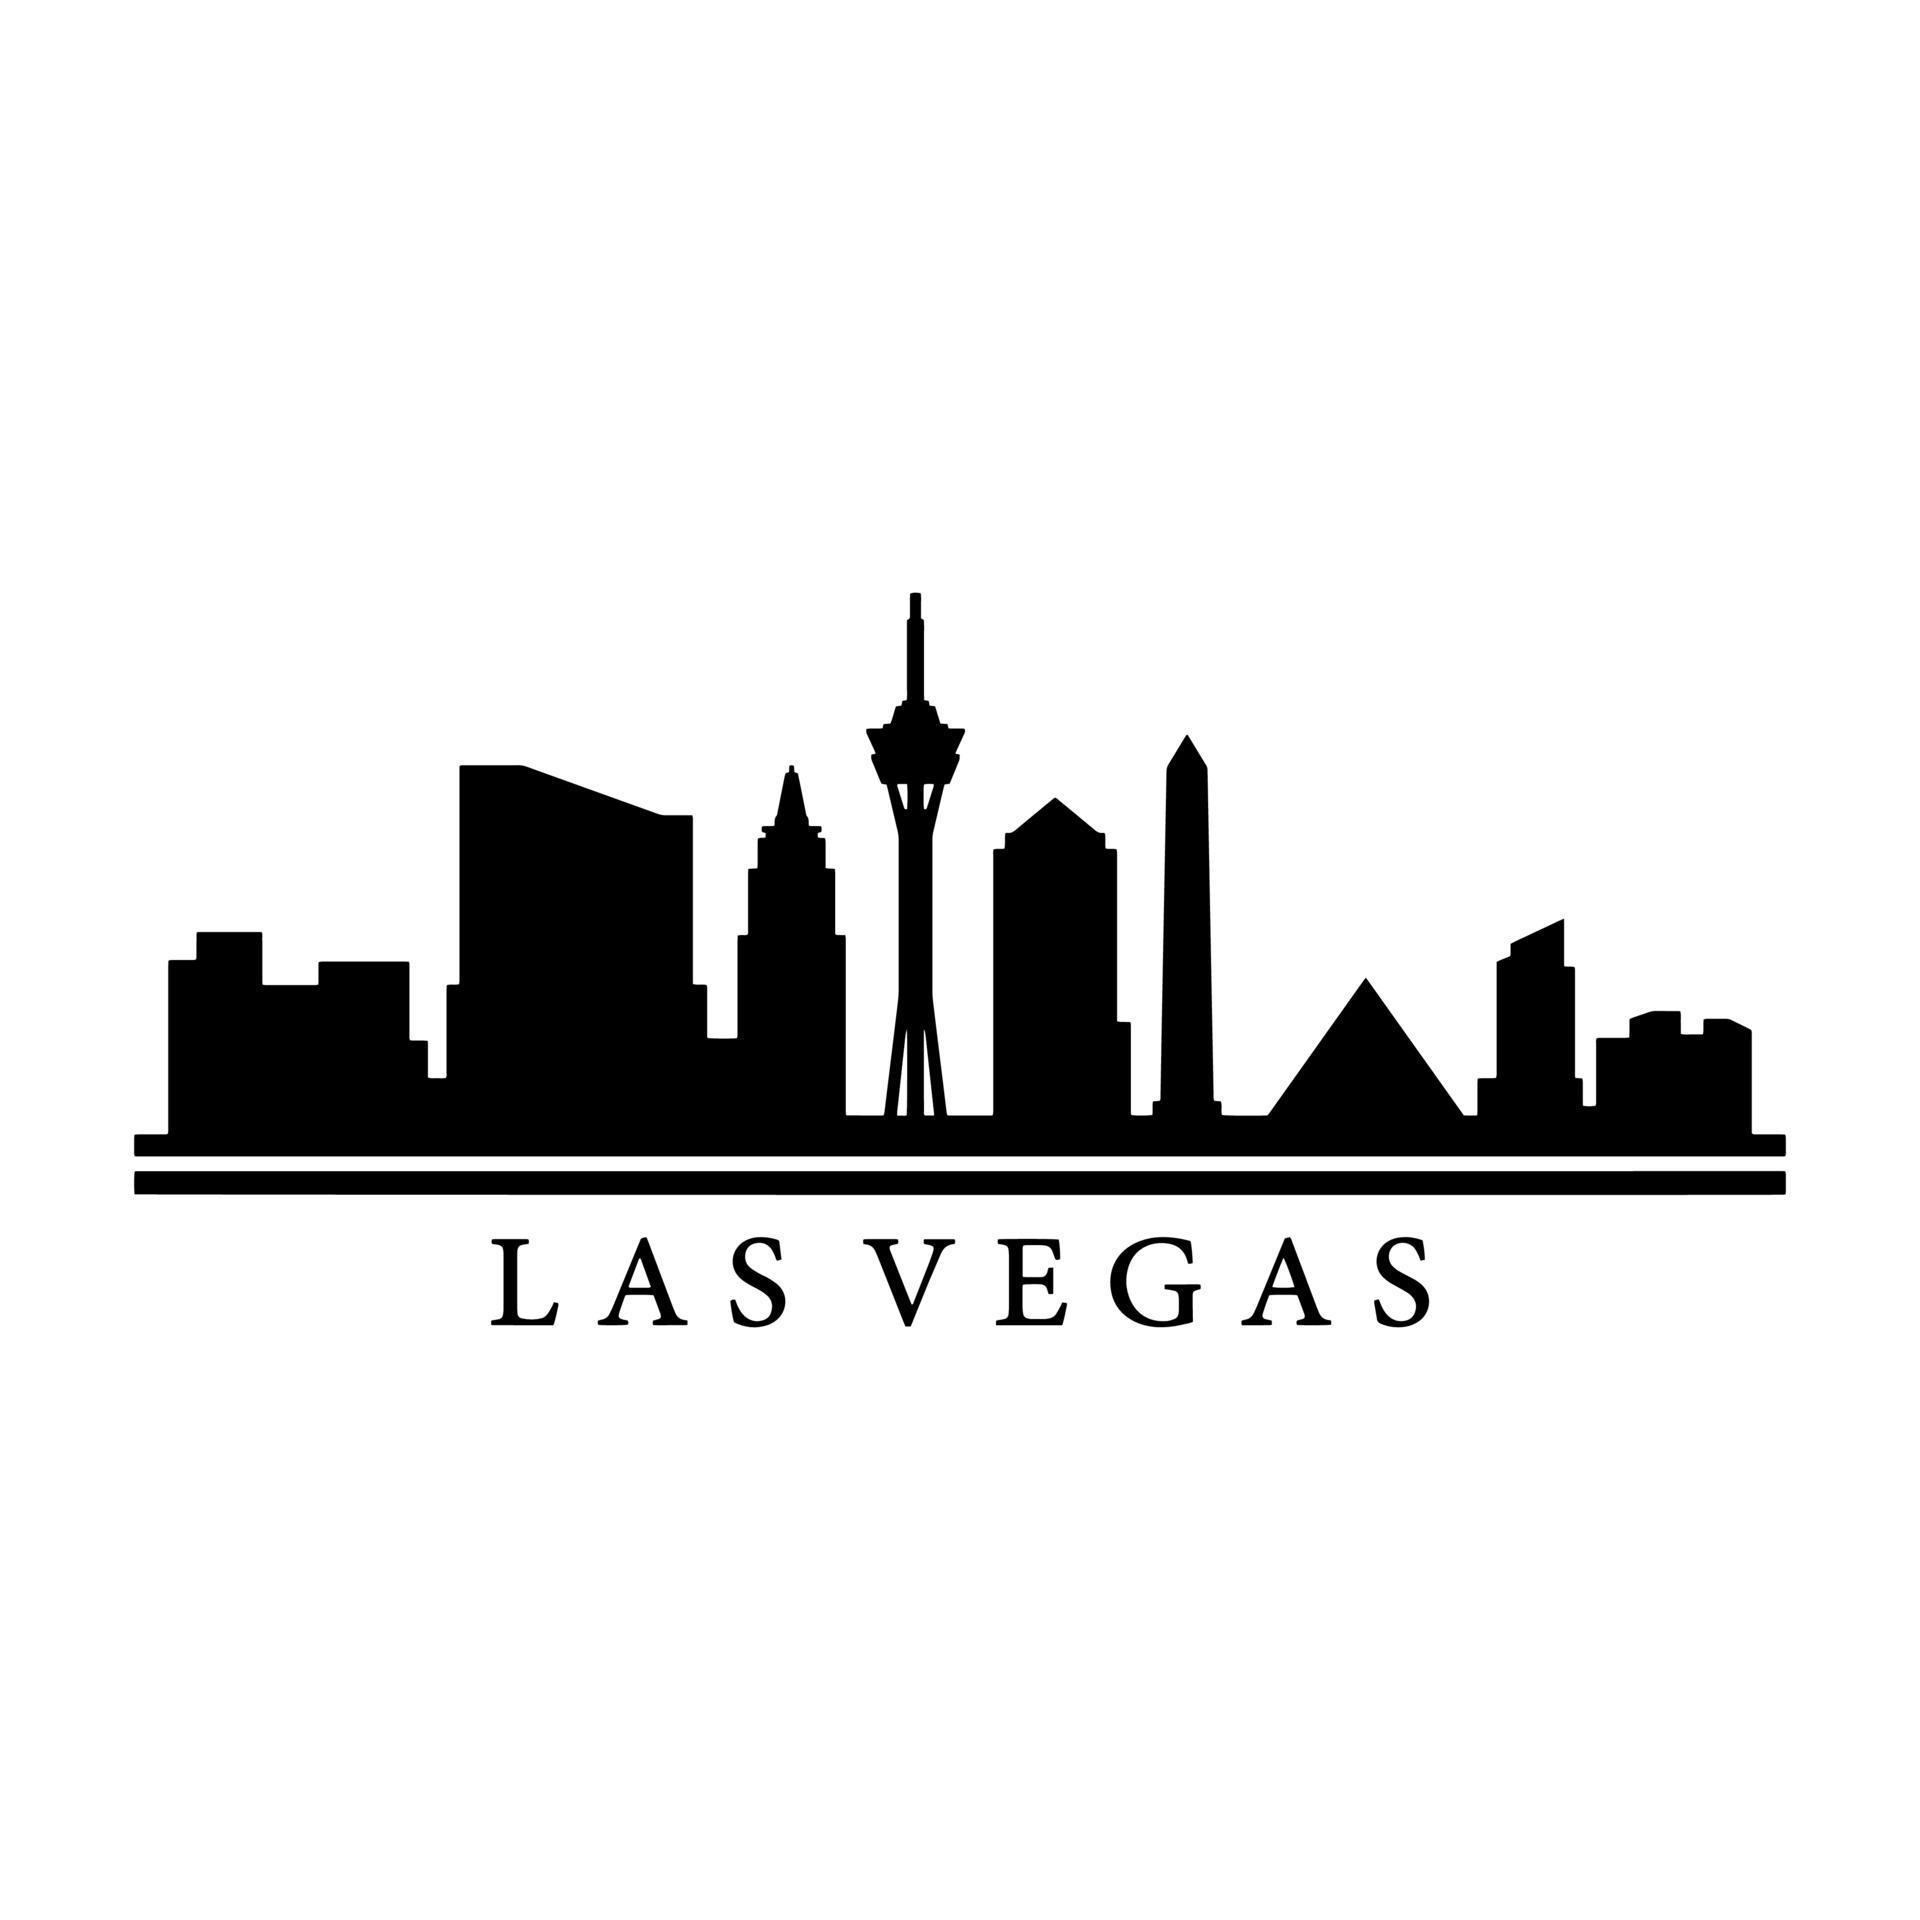 Las Vegas Skyline Illustrated On White Background 3371132 Vector Art at ...